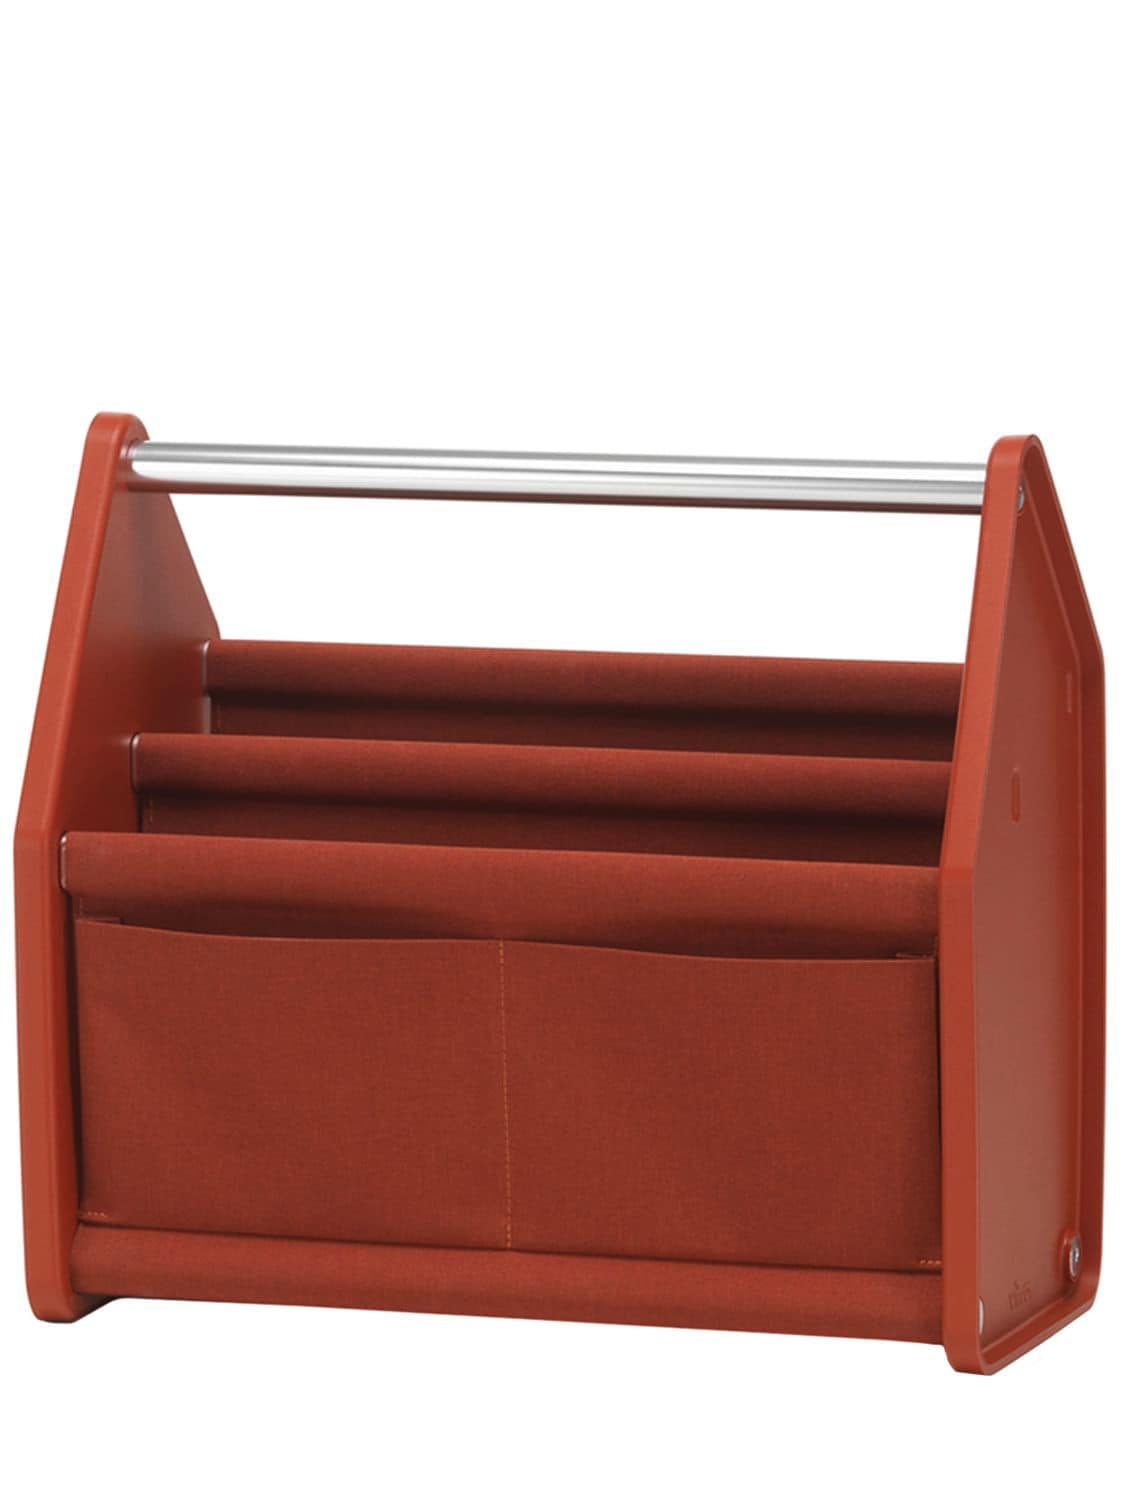 Vitra Small Locker Box In Red